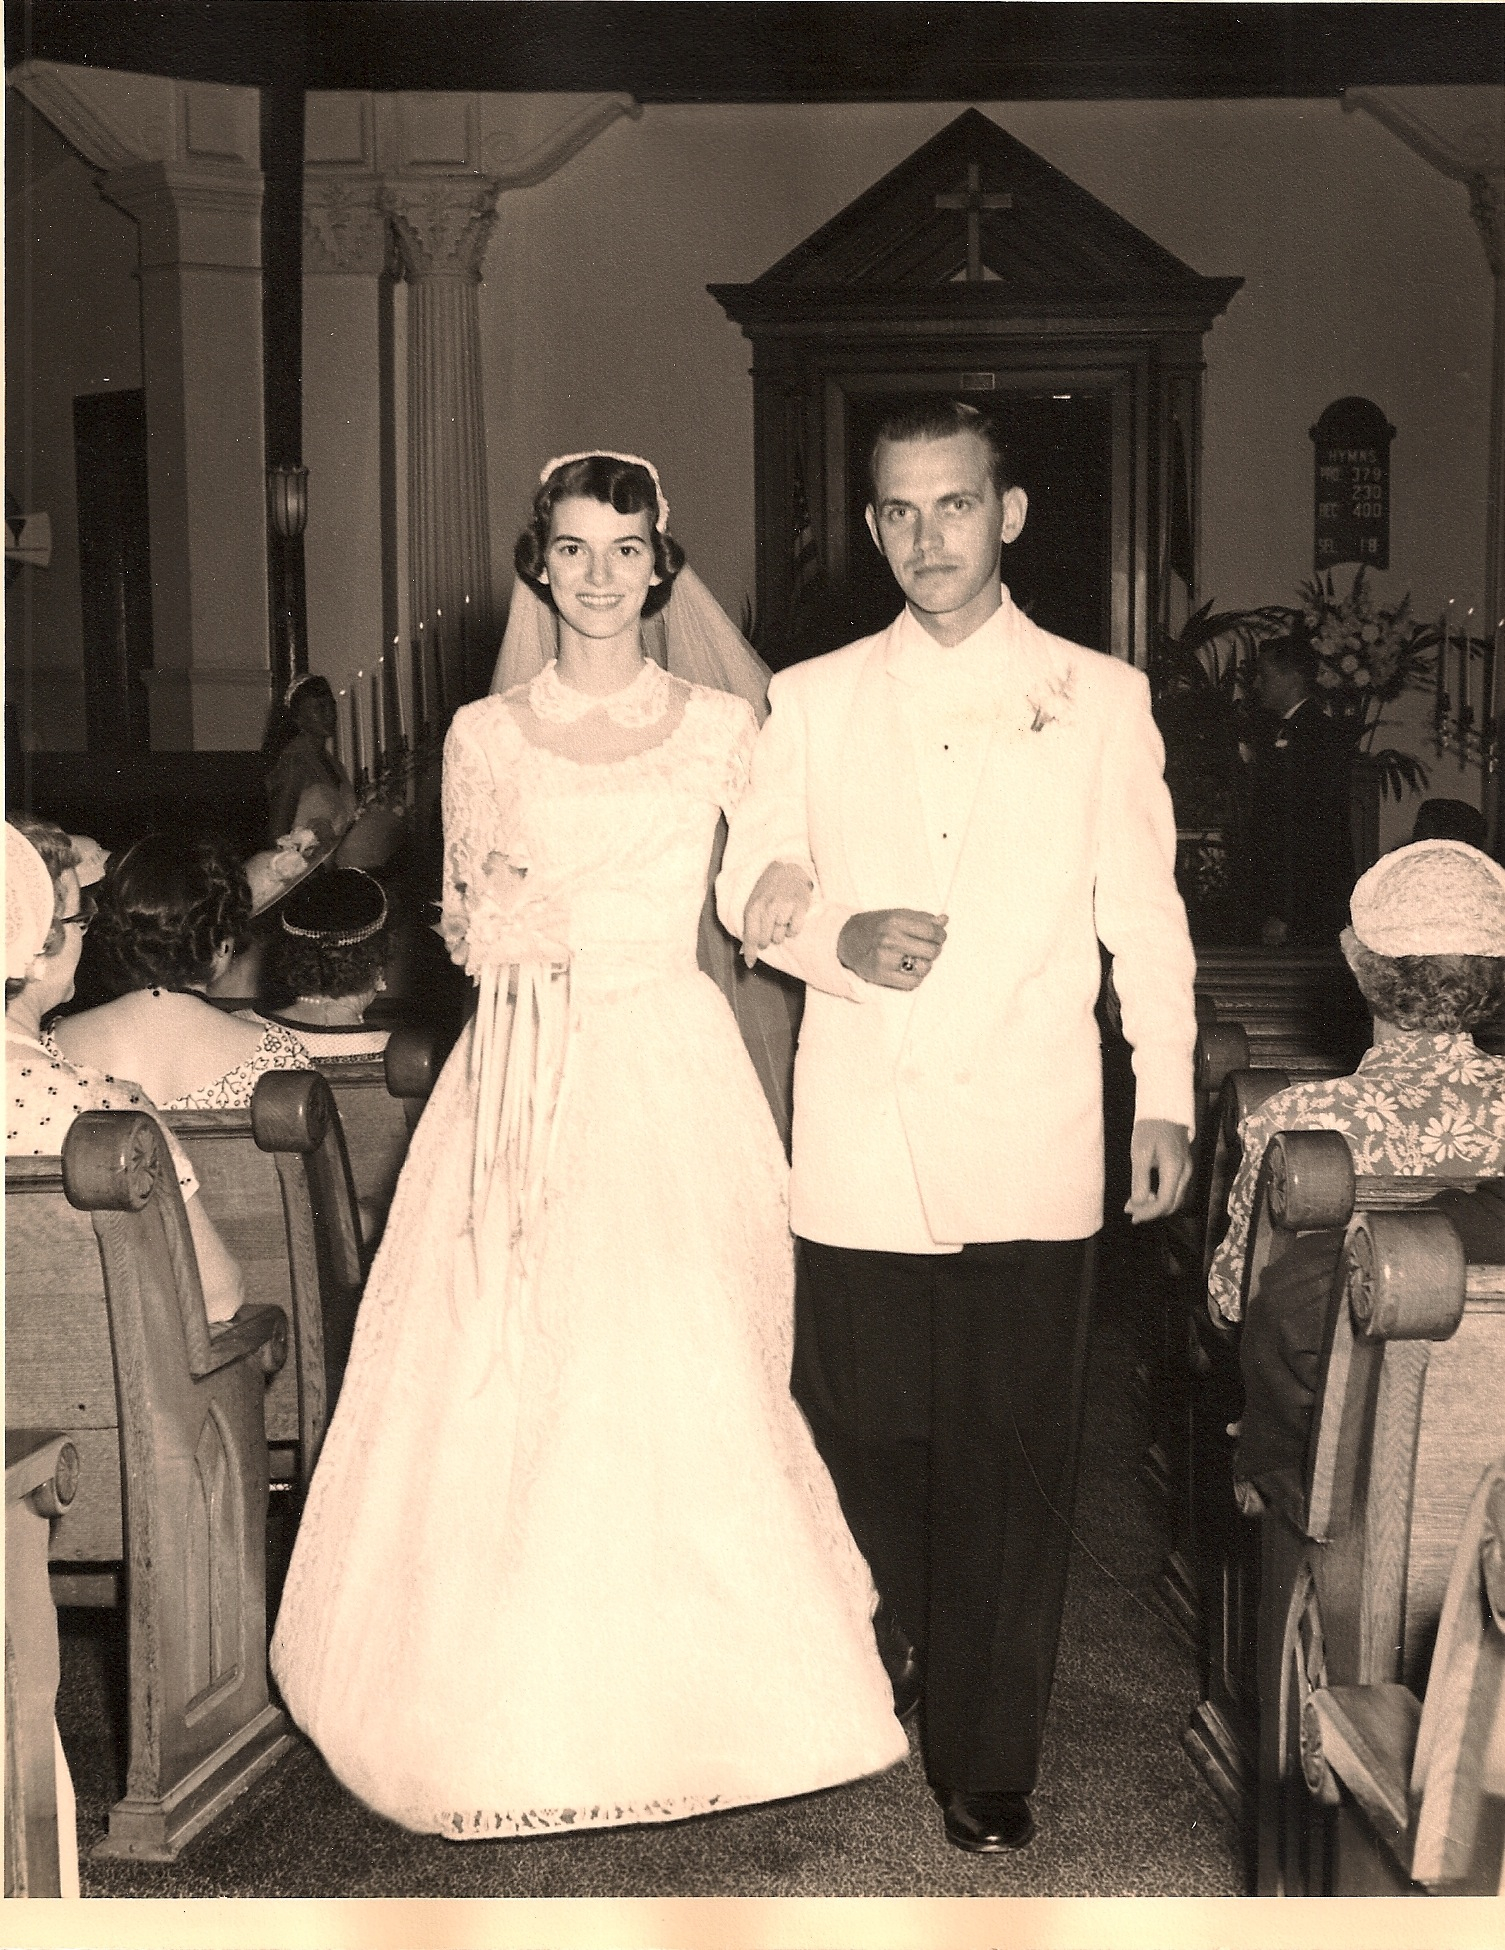 Heirloom Wedding Gown: 93 Years of Marriage - Janice Martin Couture -  Janice Martin Couture